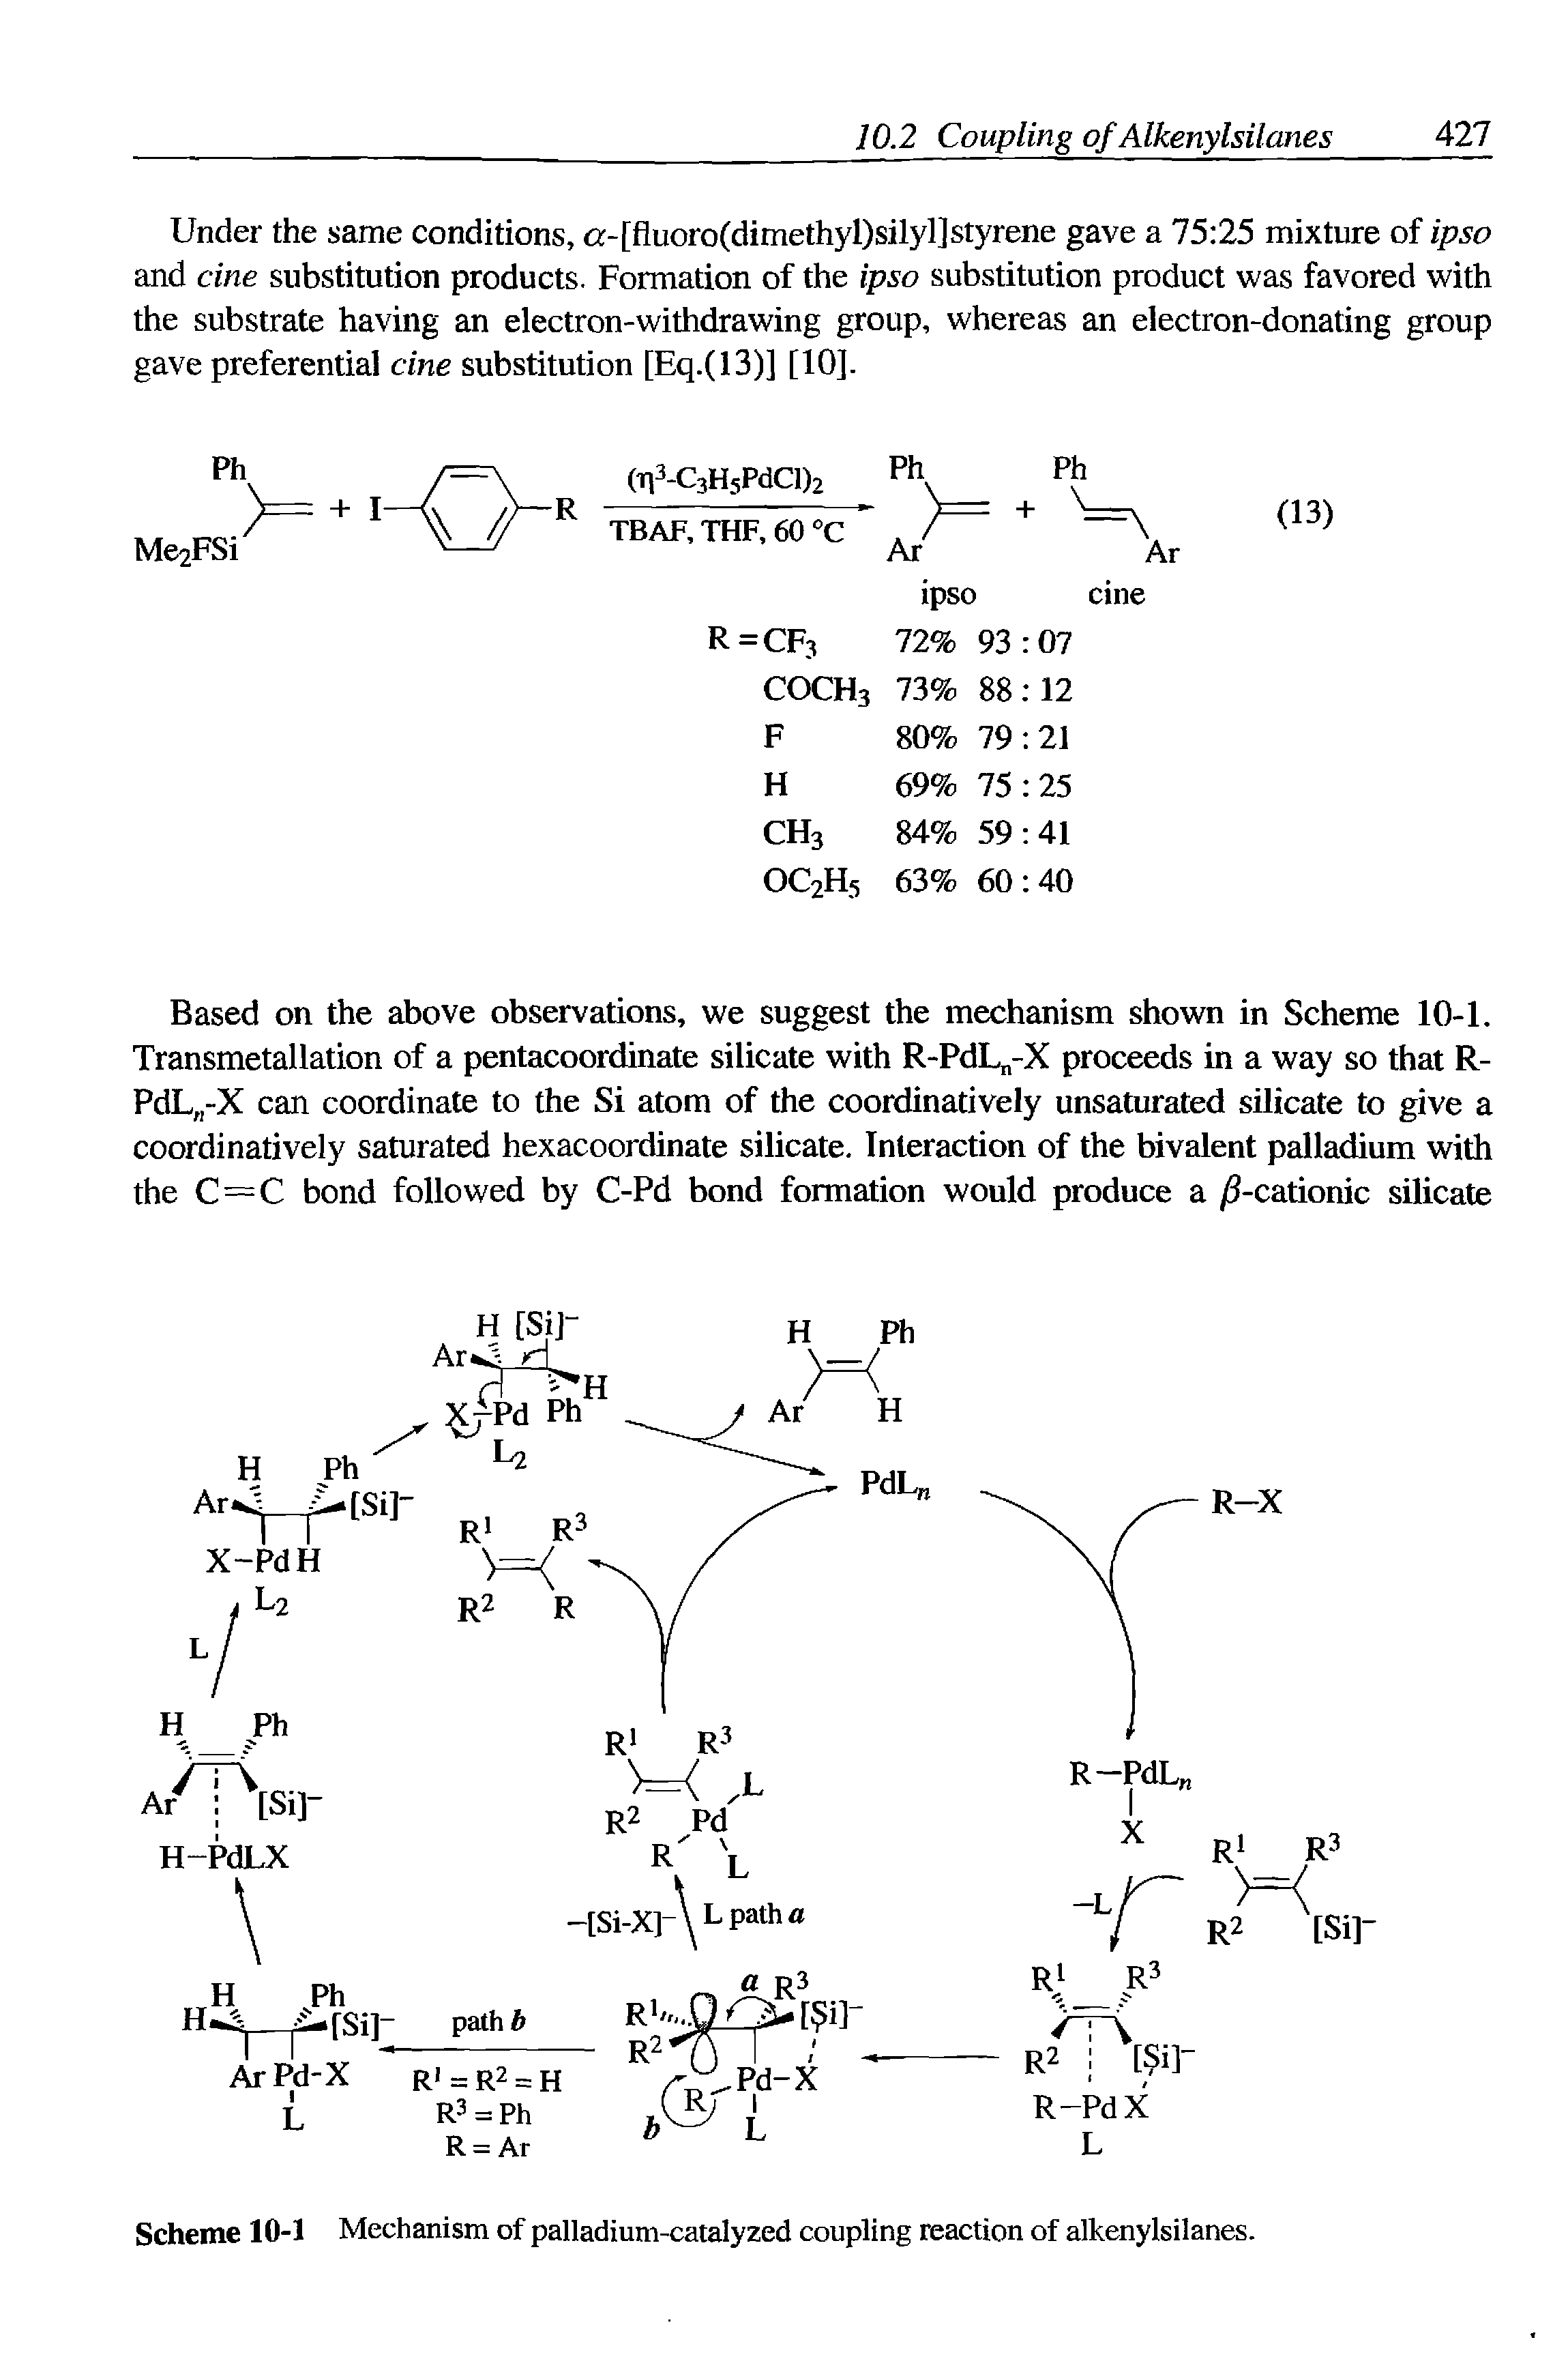 Scheme 10-1 Mechanism of palladium-catalyzed coupling reaction of alkenylsilanes.